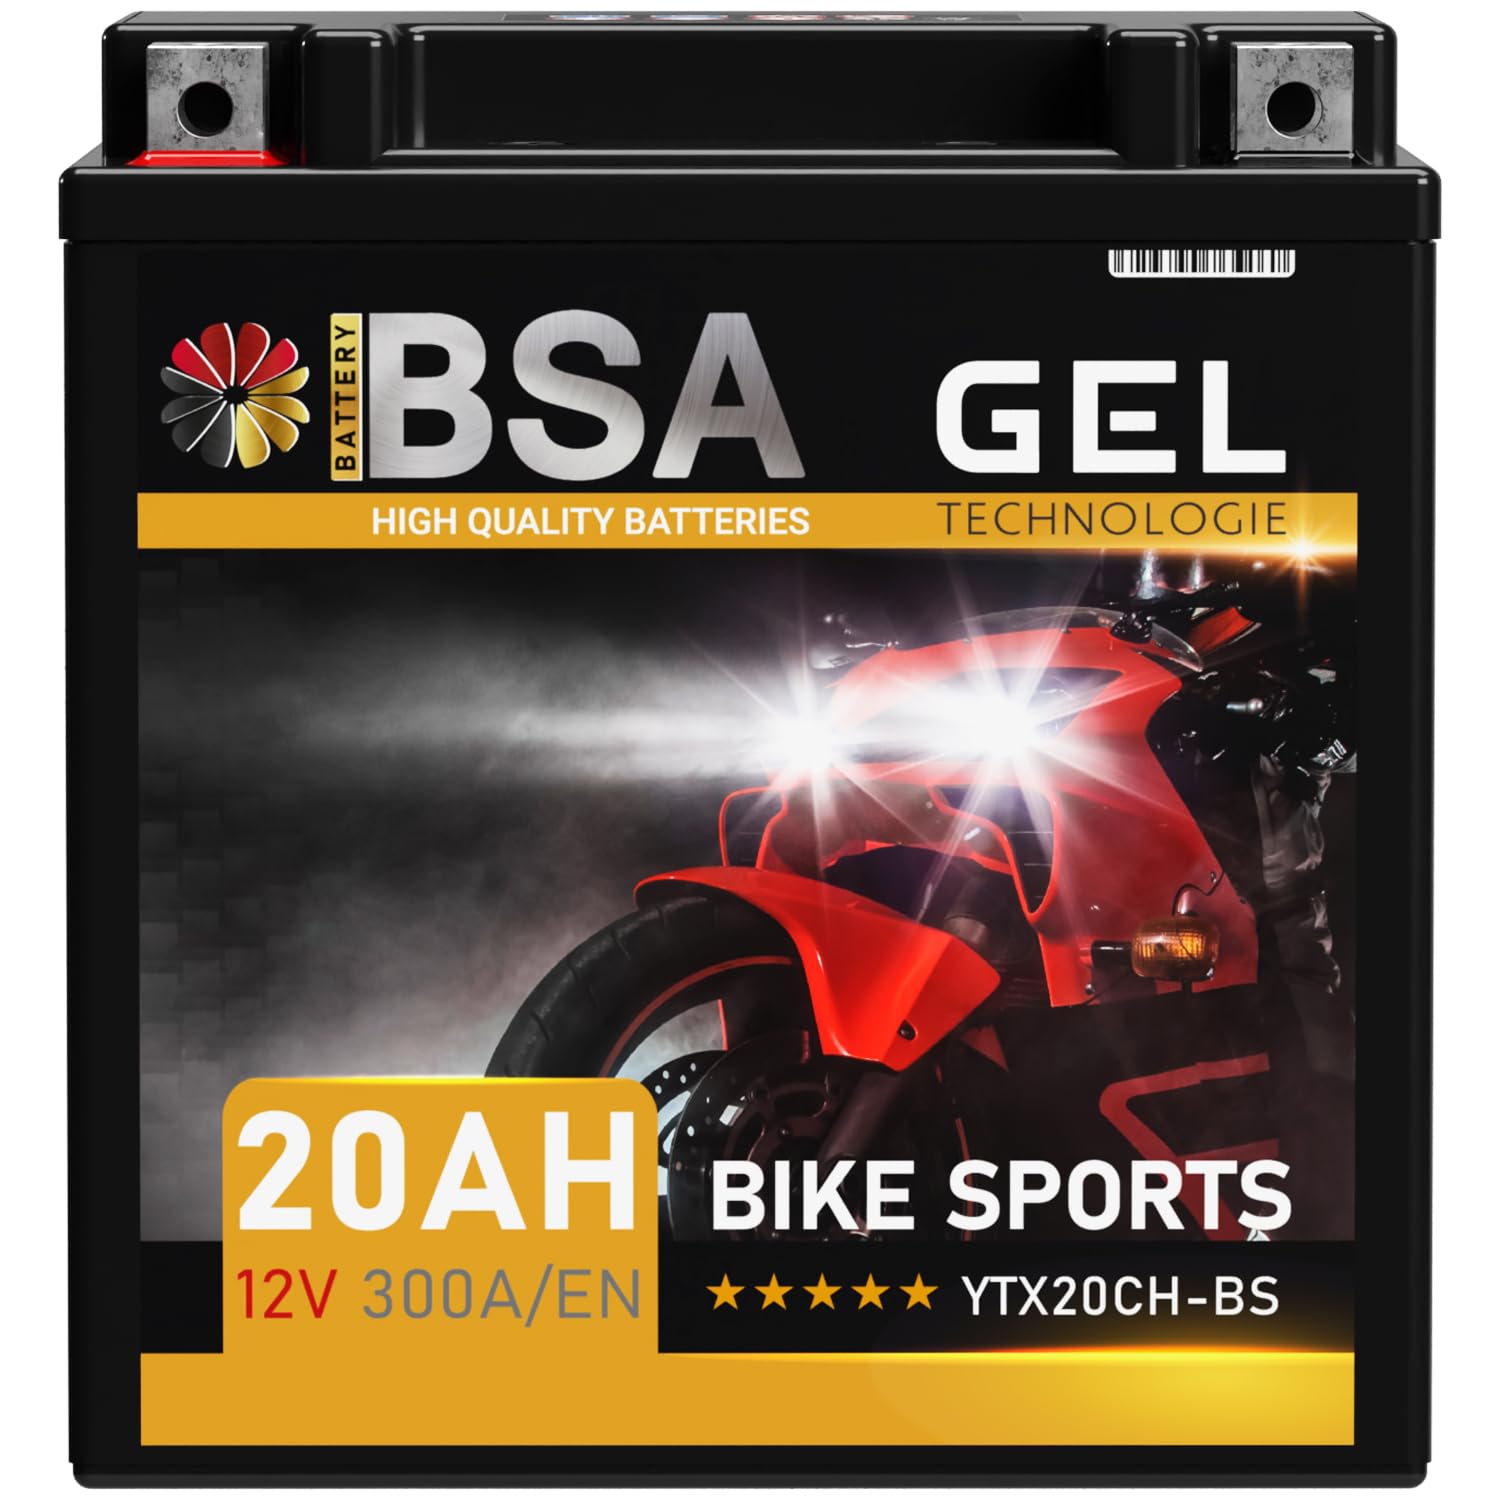 BSA YTX20CH-BS GEL Roller Batterie 12V 20Ah 300A/EN Motorradbatterie doppelte Lebensdauer entspricht 51892 vorgeladen auslaufsicher wartungsfrei von BSA BATTERY HIGH QUALITY BATTERIES